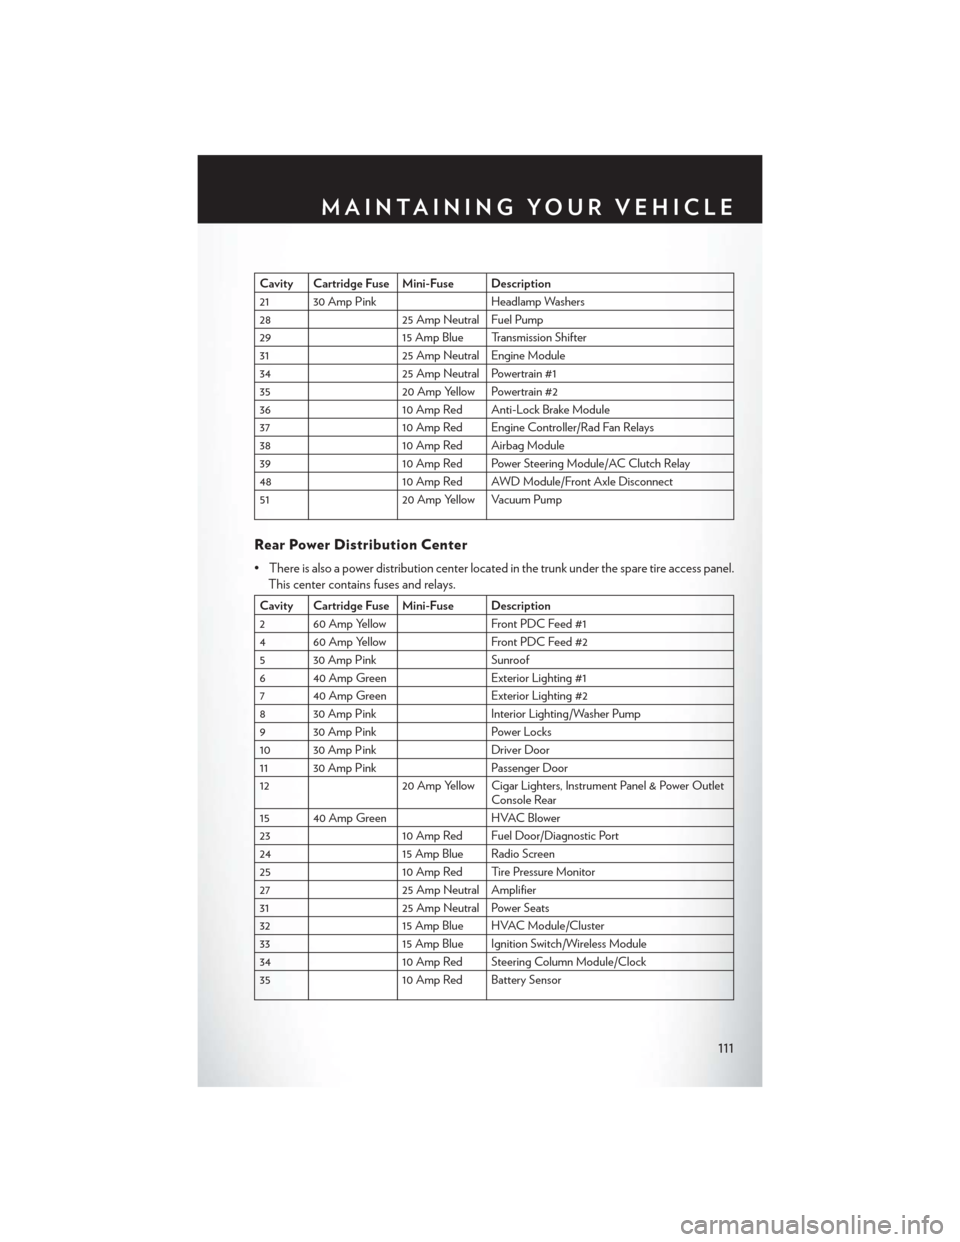 CHRYSLER 300 SRT 2013 2.G User Guide Cavity Cartridge Fuse Mini-Fuse Description
21 30 Amp PinkHeadlamp Washers
28 25 Amp Neutral Fuel Pump
29 15 Amp Blue Transmission Shifter
31 25 Amp Neutral Engine Module
34 25 Amp Neutral Powertrain 